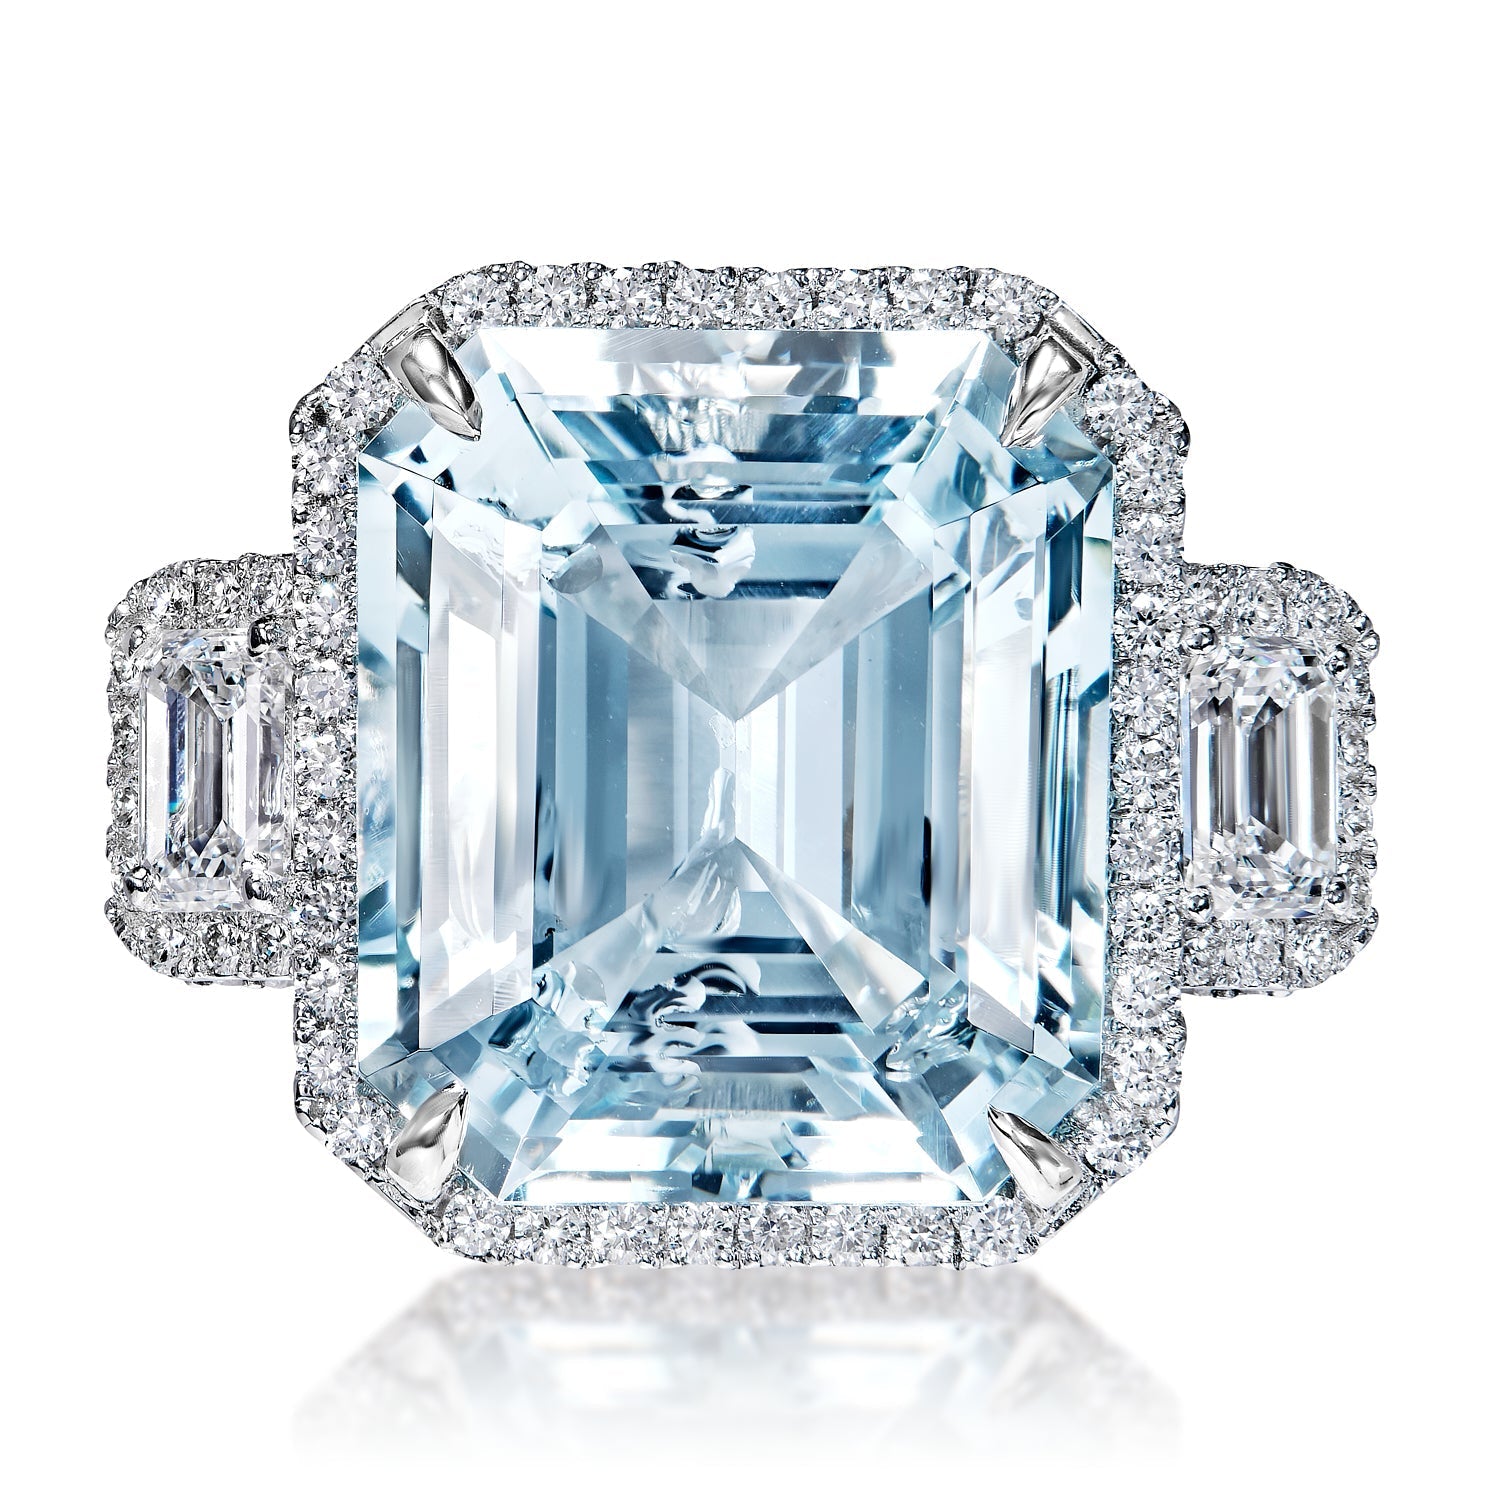 27 Incredibly Beautiful Diamond Engagement Rings | Big diamond rings, Engagement  ring shapes, Engagement rings